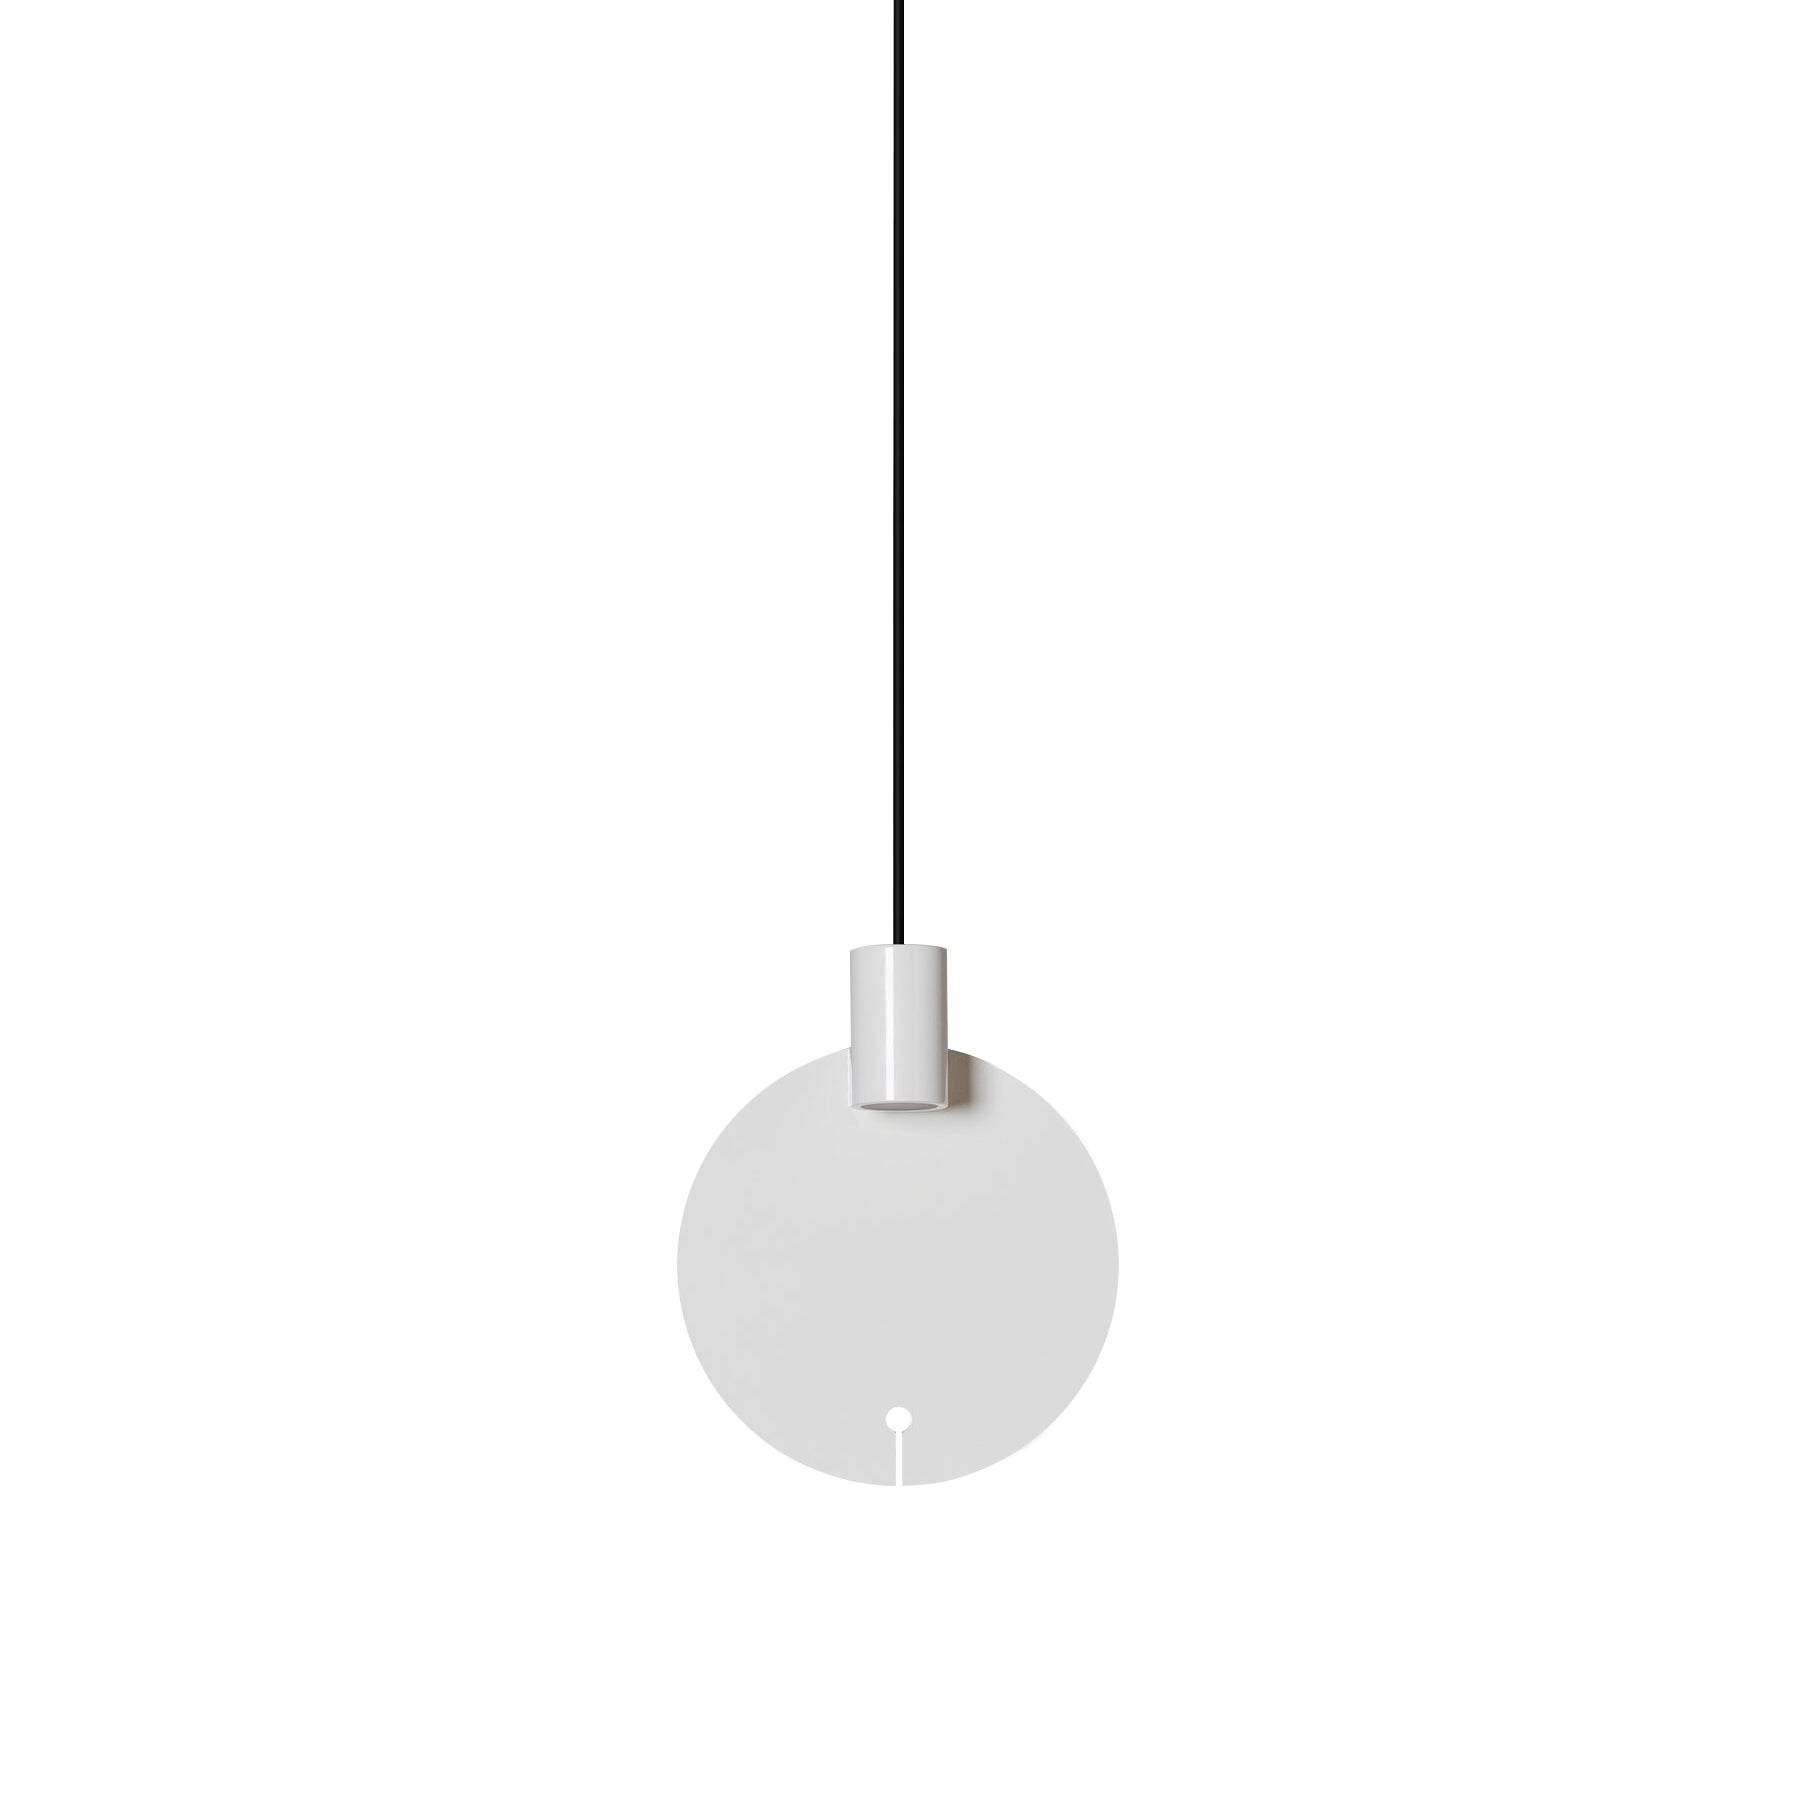 Bijous Pendant Lamp: Small - 5.1